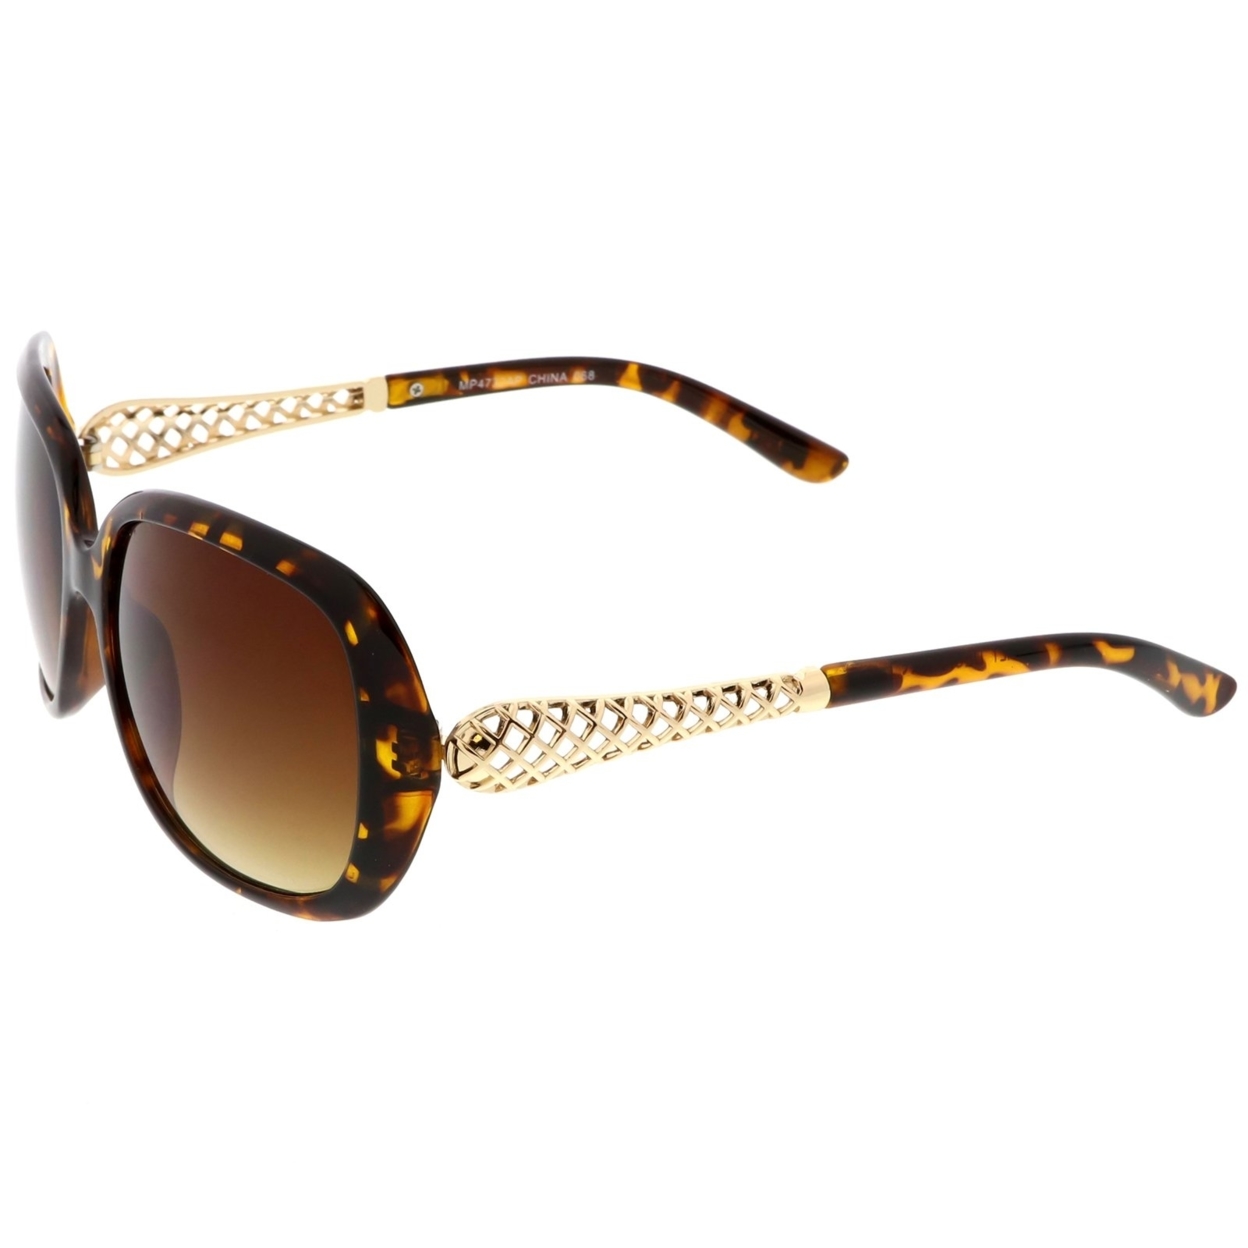 Women's Oversize Square Sunglasses With Metal Arm Accents Gradient Lens 59mm - Black Silver / Lavender